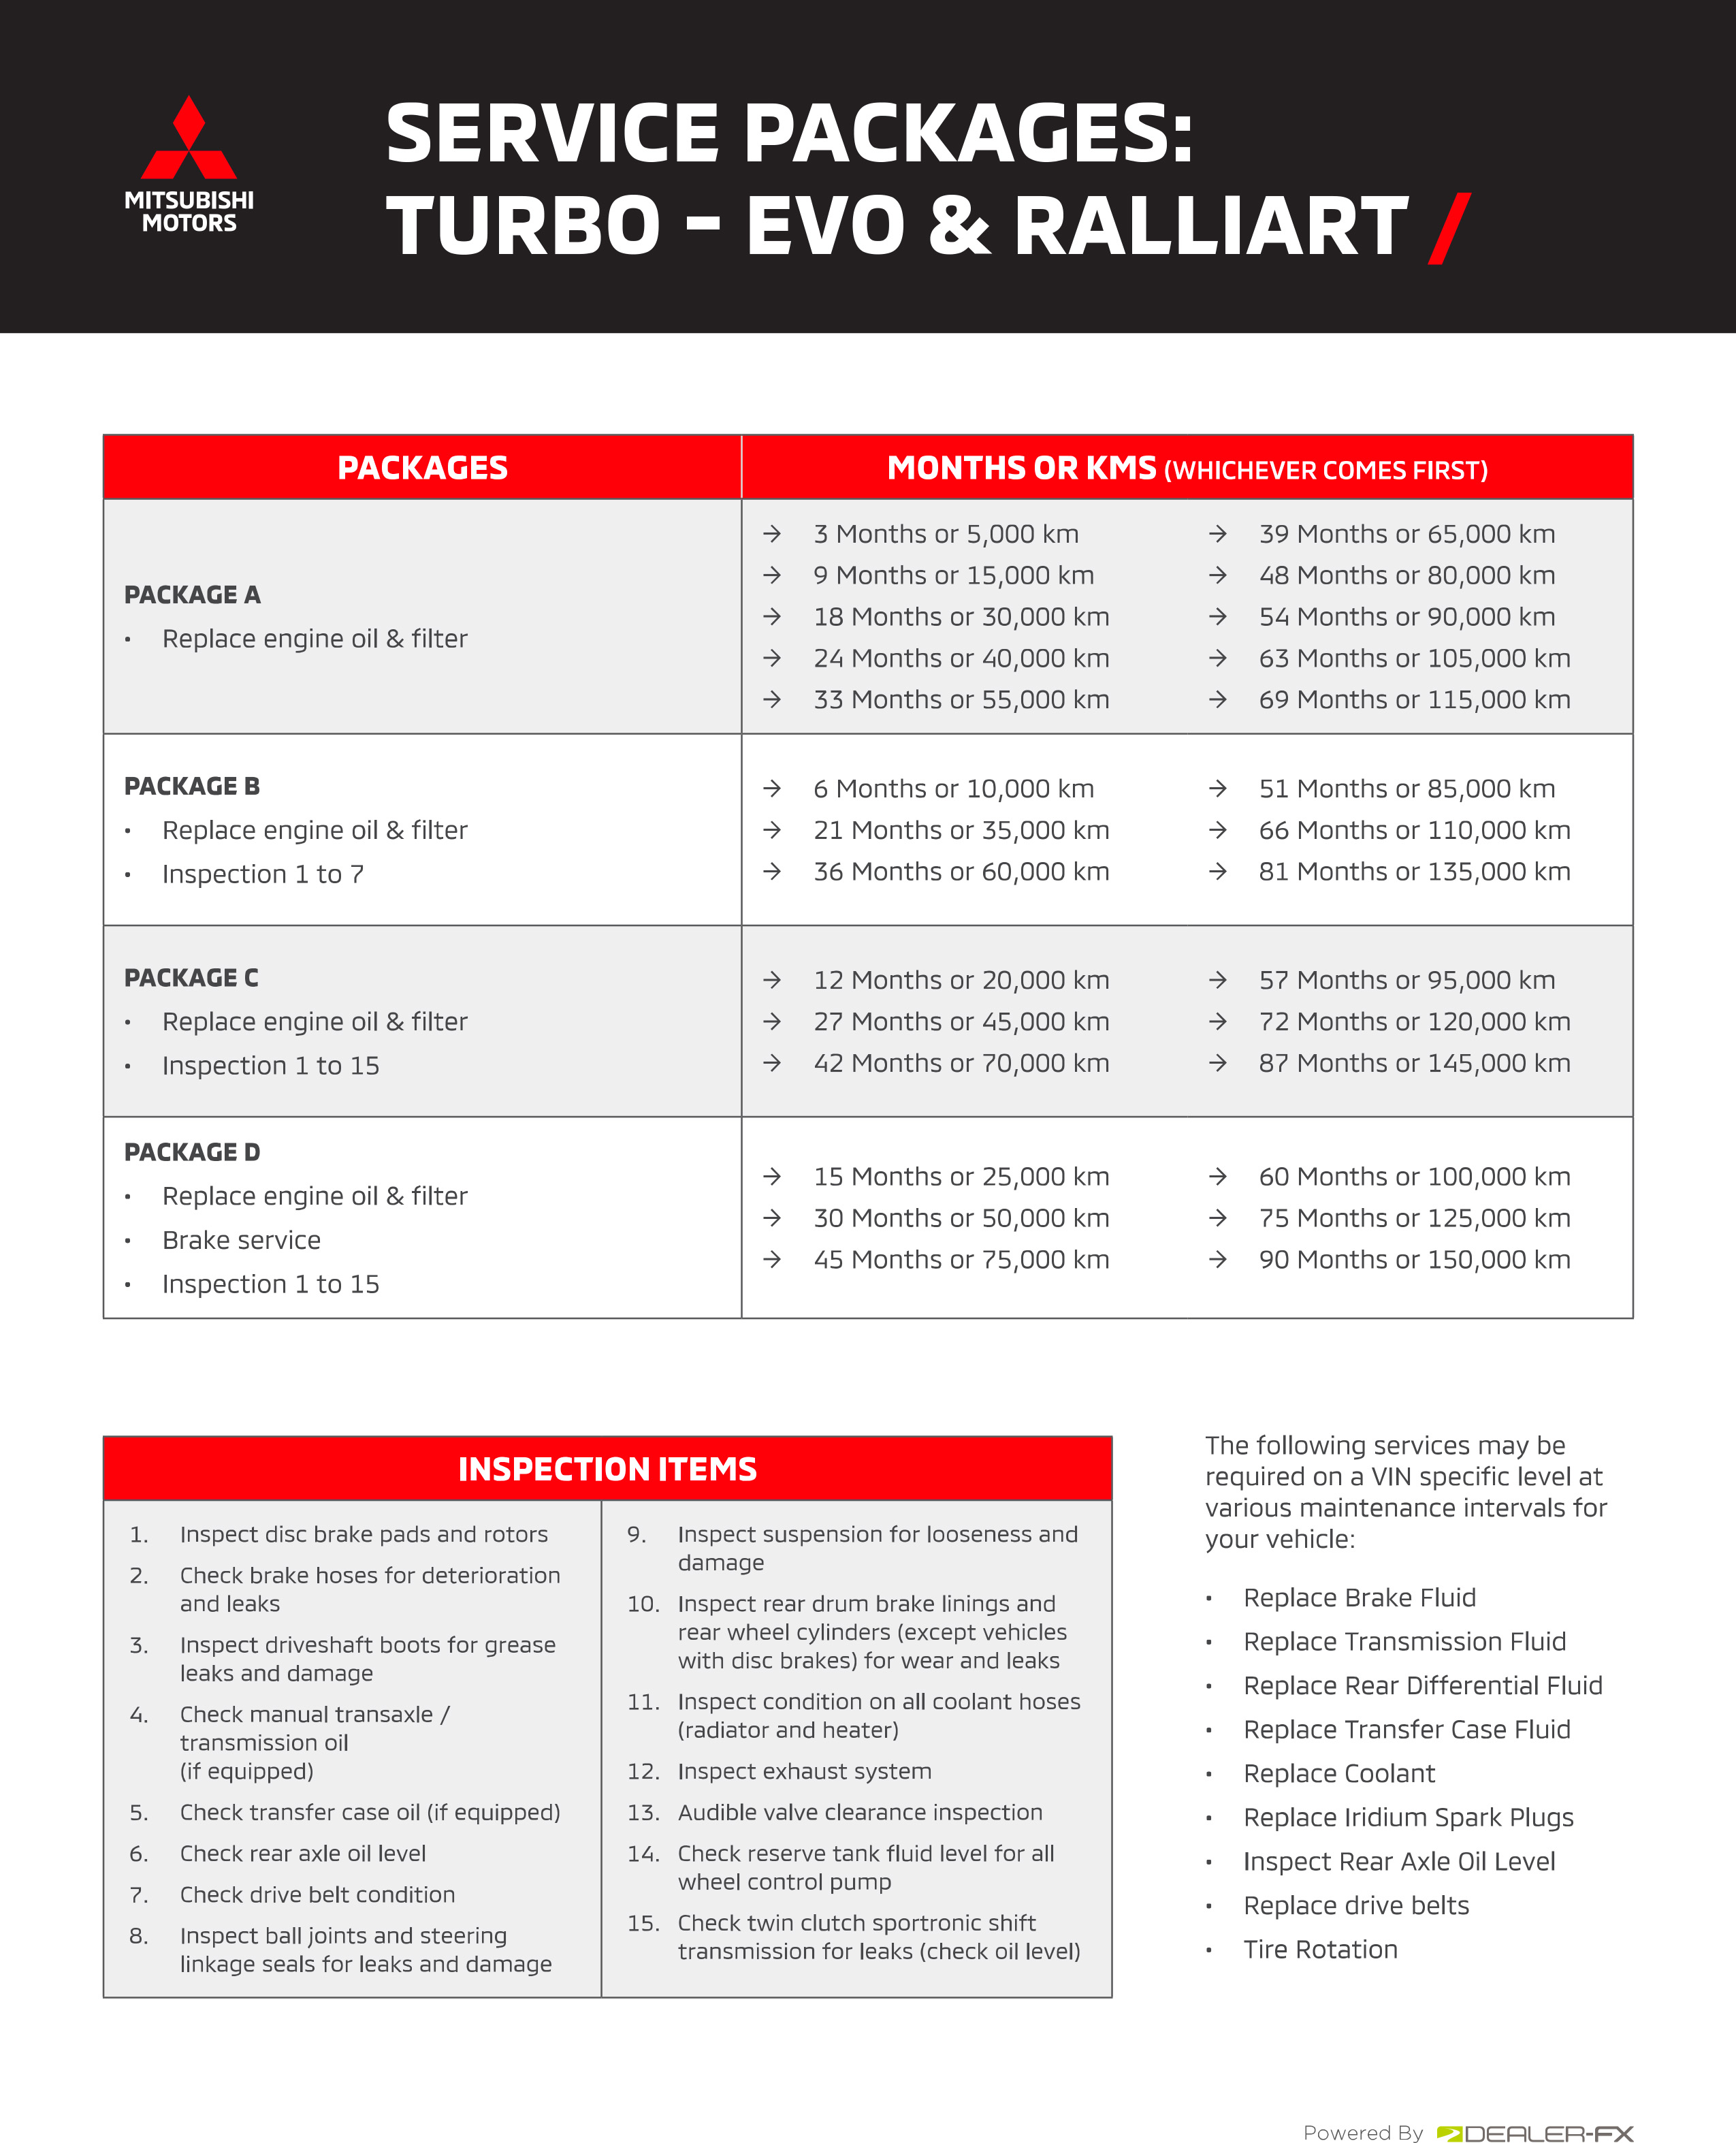 Turbo - Evo & Ralliart